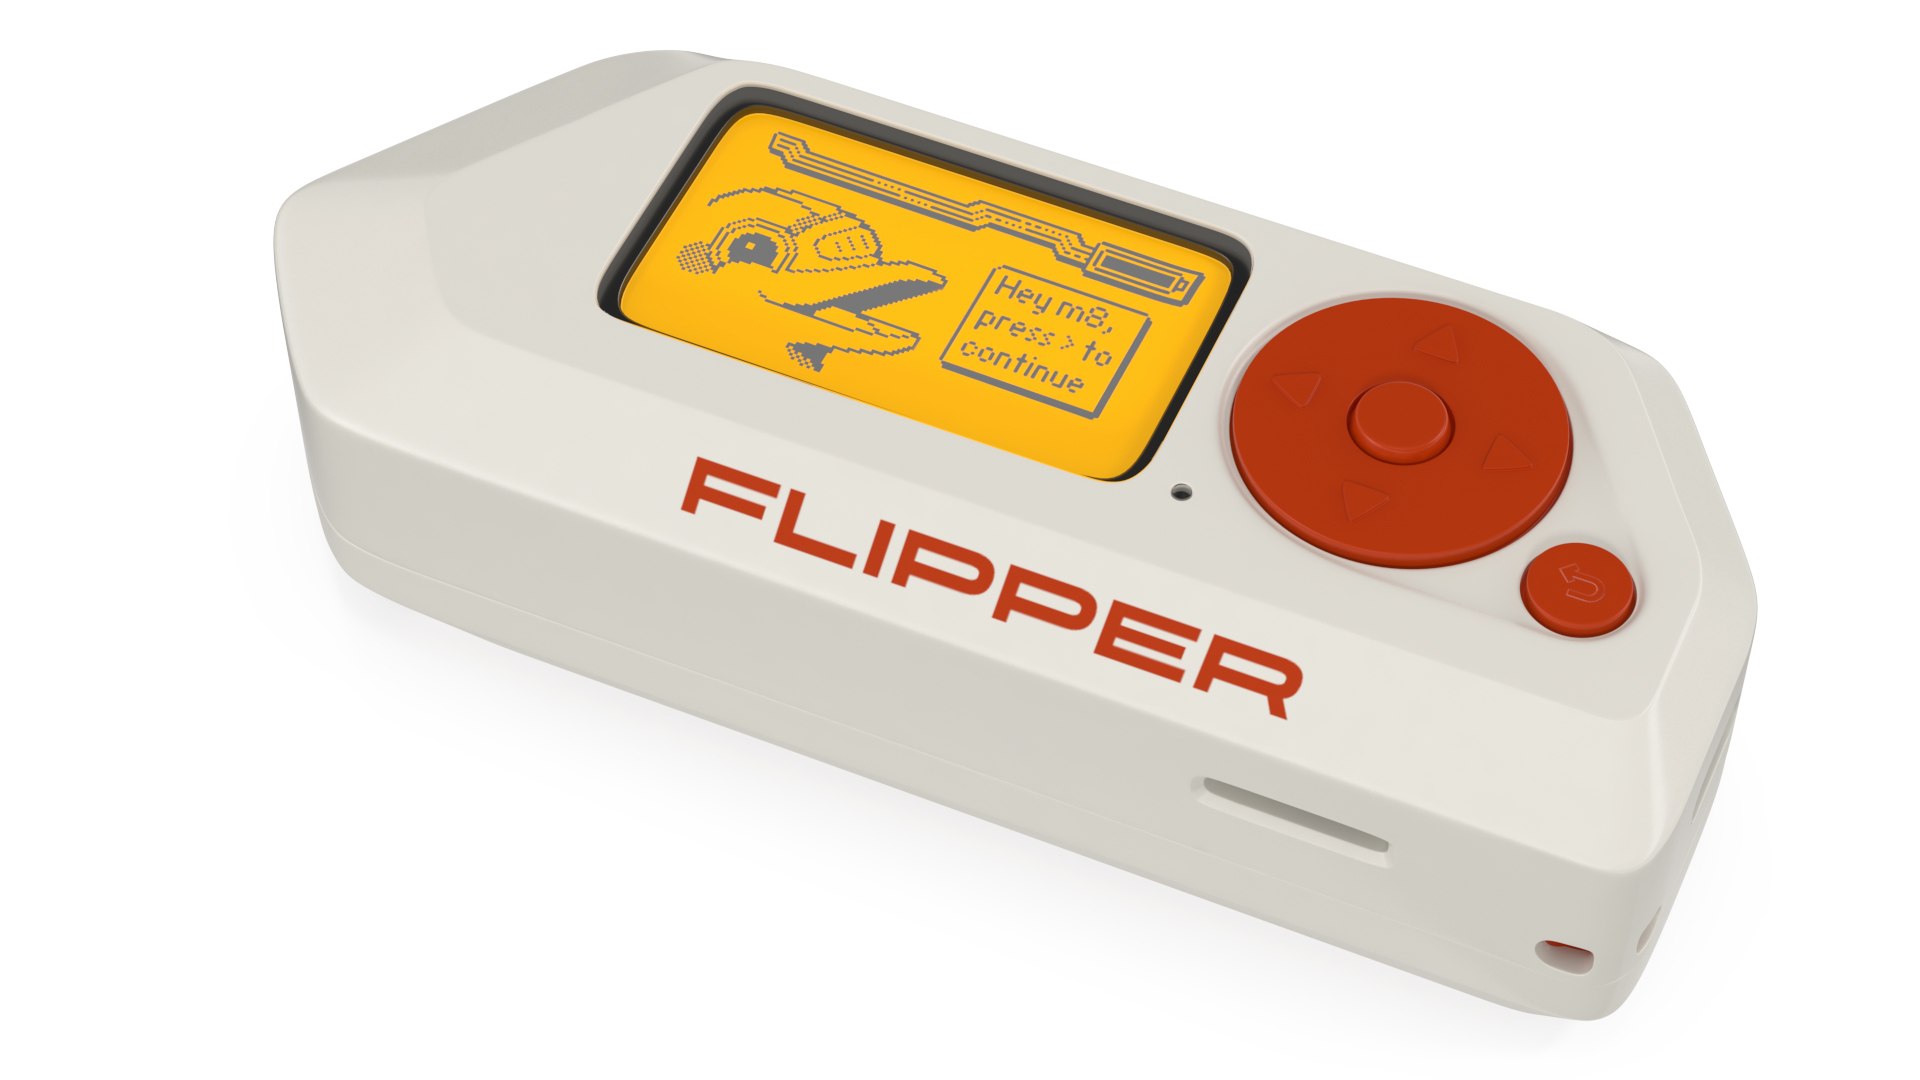 Flipper Zero Electronic Pet & Hacking Multi Tool for sale online